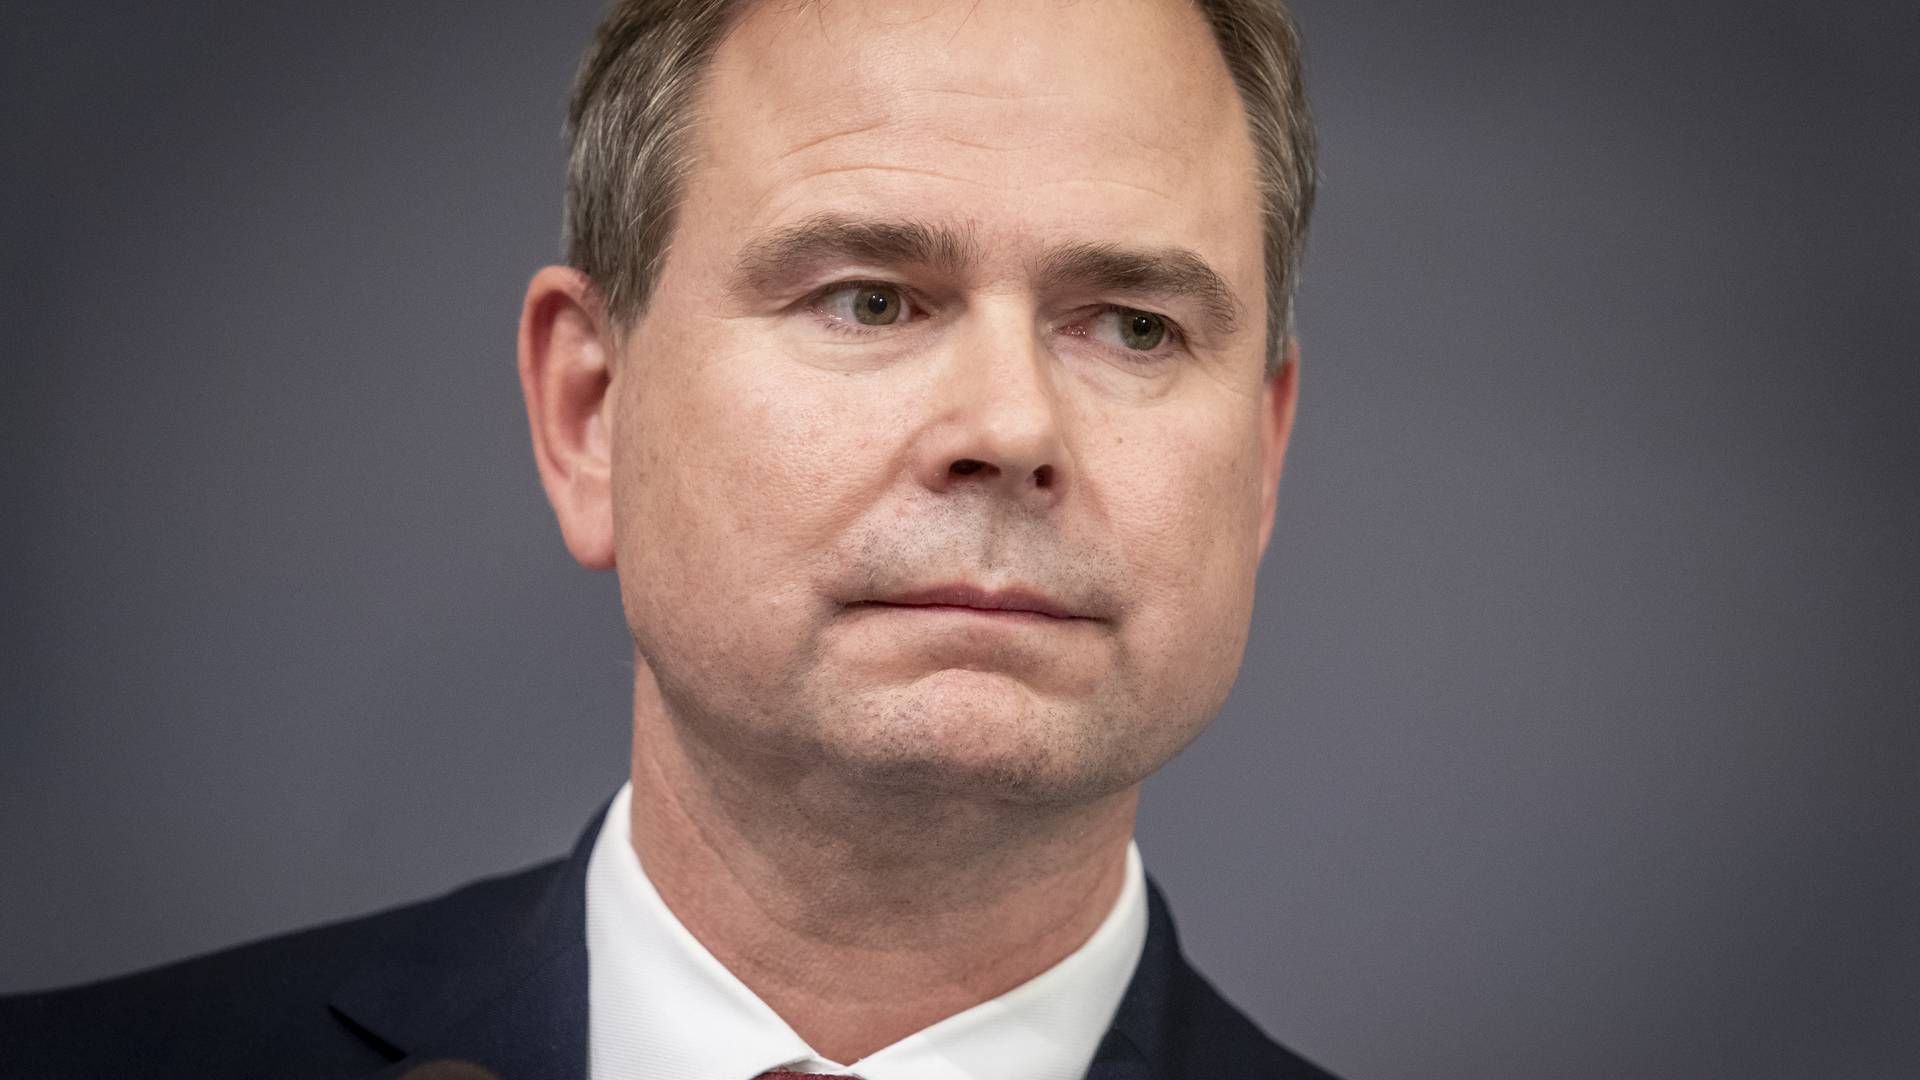 Finansminister Nicolai Wammen. | Foto: Mads Claus Rasmussen